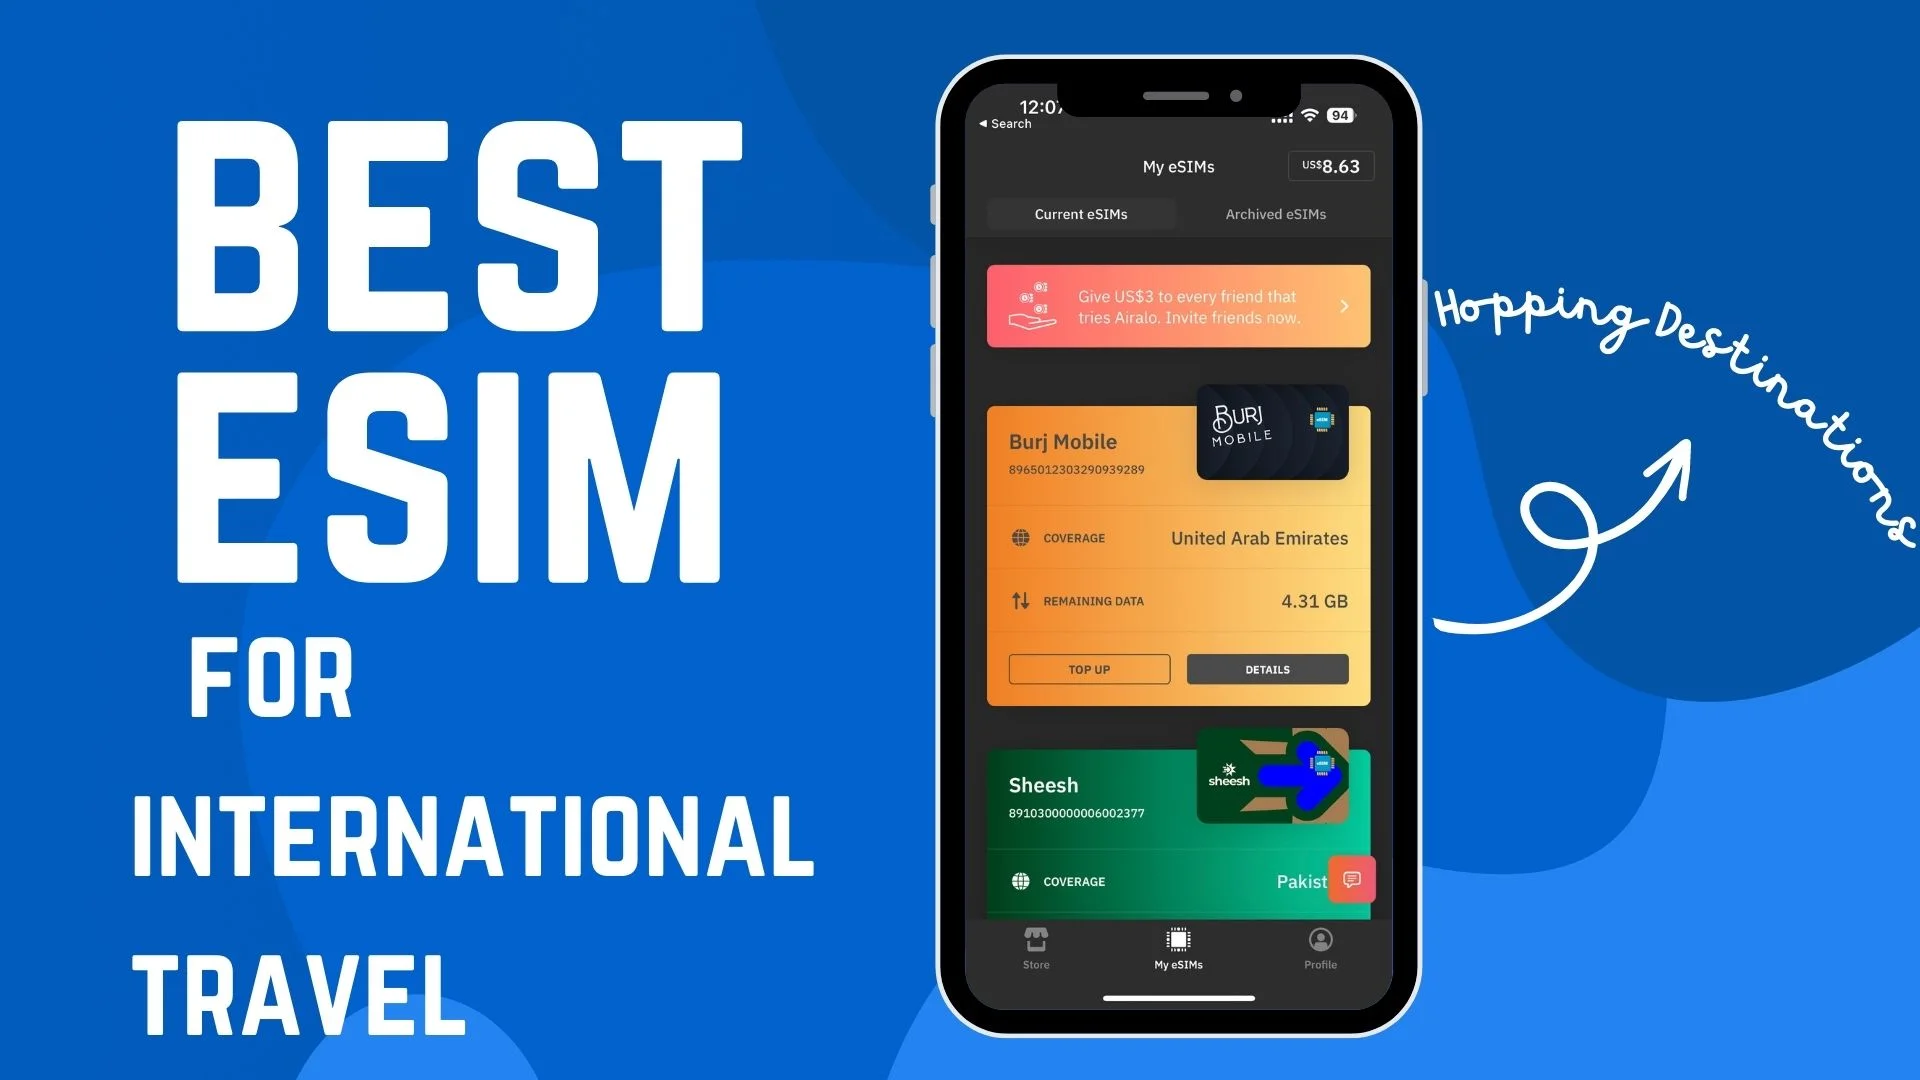 Best eSim for Internation Travel